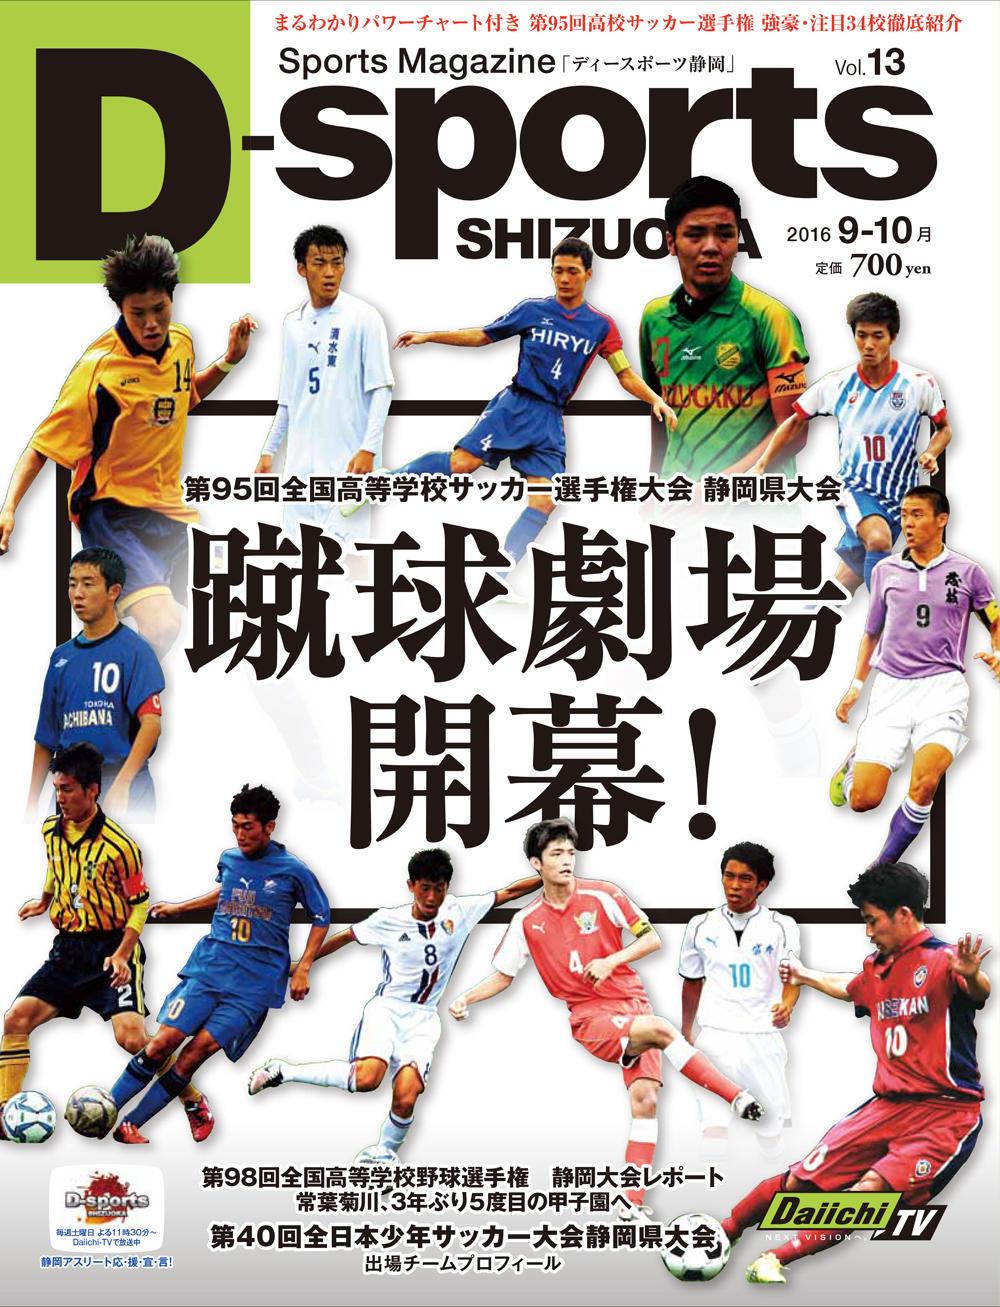 http://d-sports.shizuokastandard.jp/article/2016/dsp_13_h1.jpg